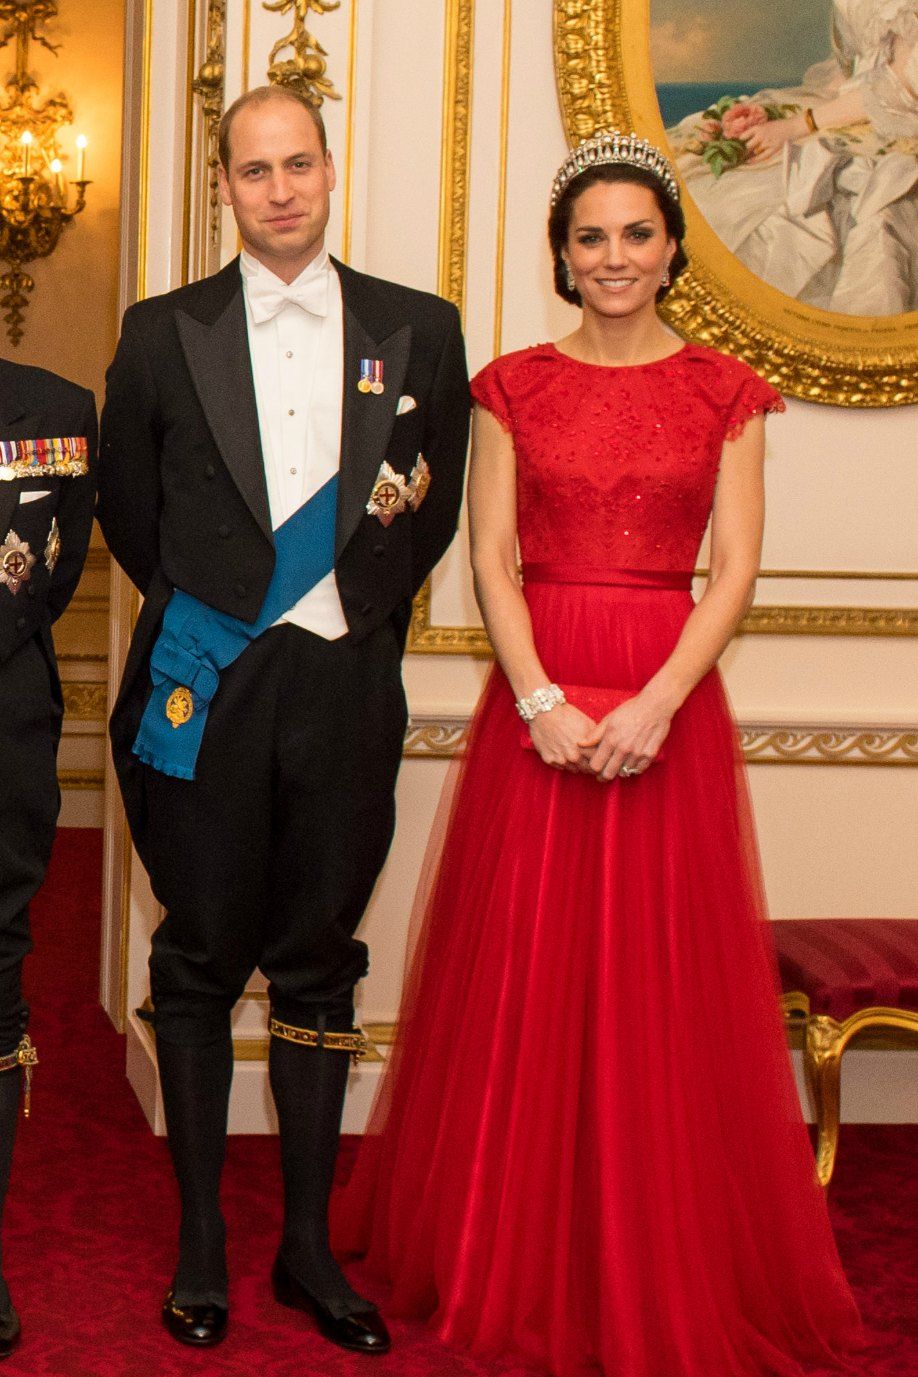 Duke and Duchess of Cambridge diplomatic reception Buckingham Palace